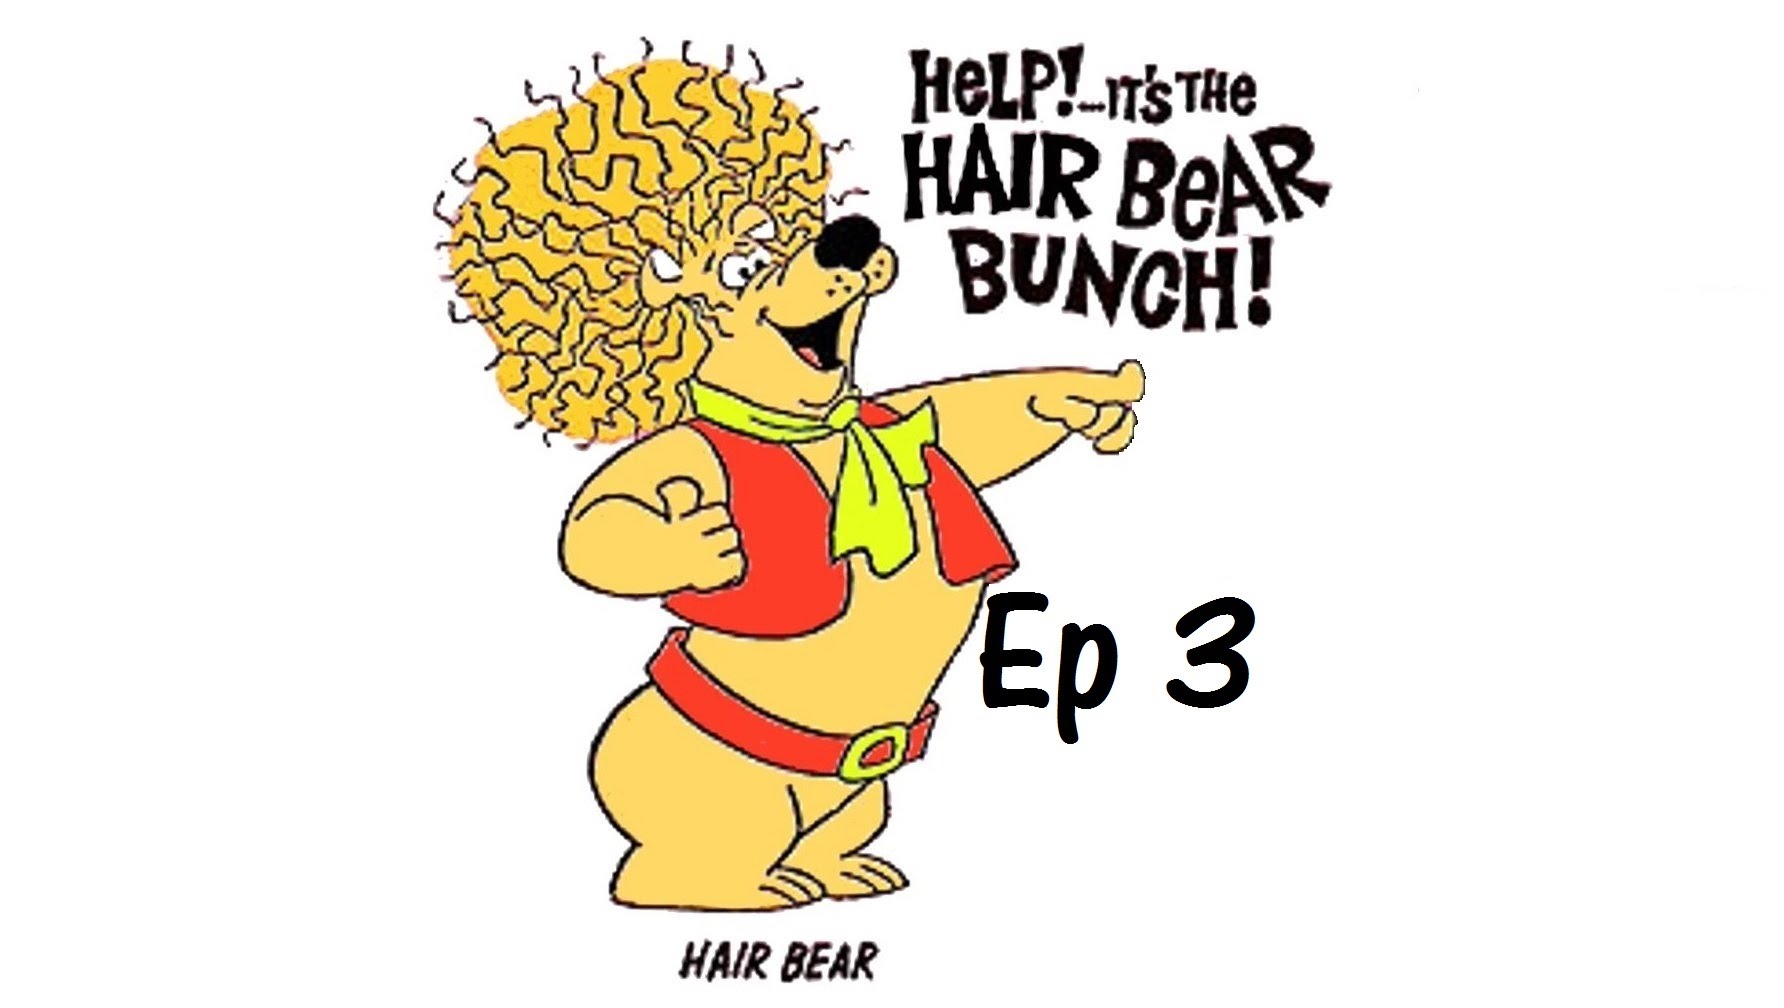 Hair Bear Bunch #2